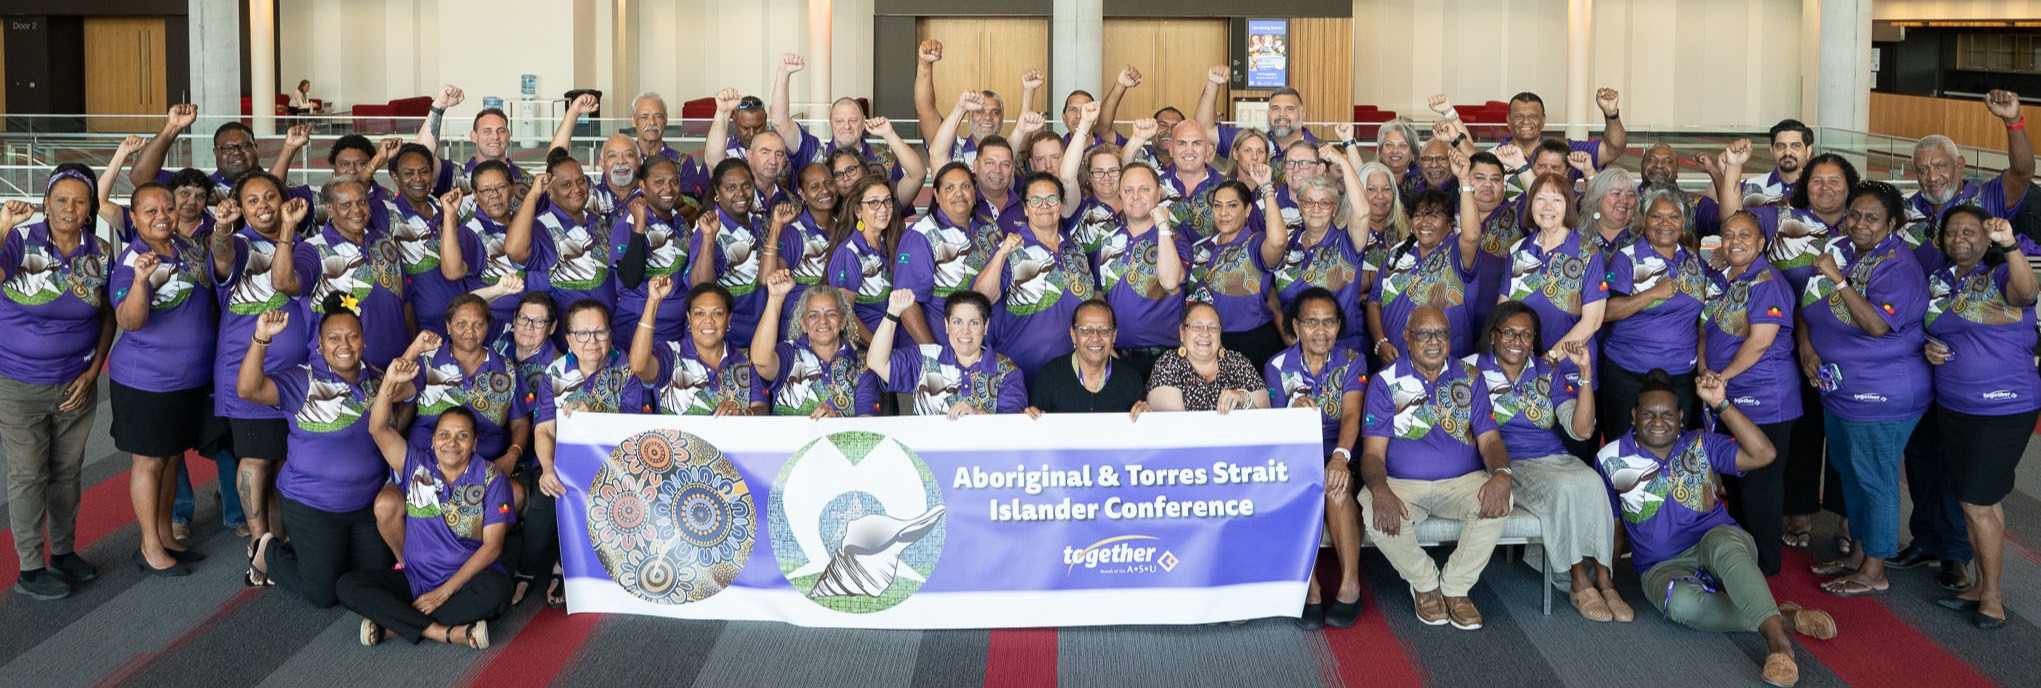 221024-25 For members - Aboriginal and Torres Strait Islander Member Conference 84